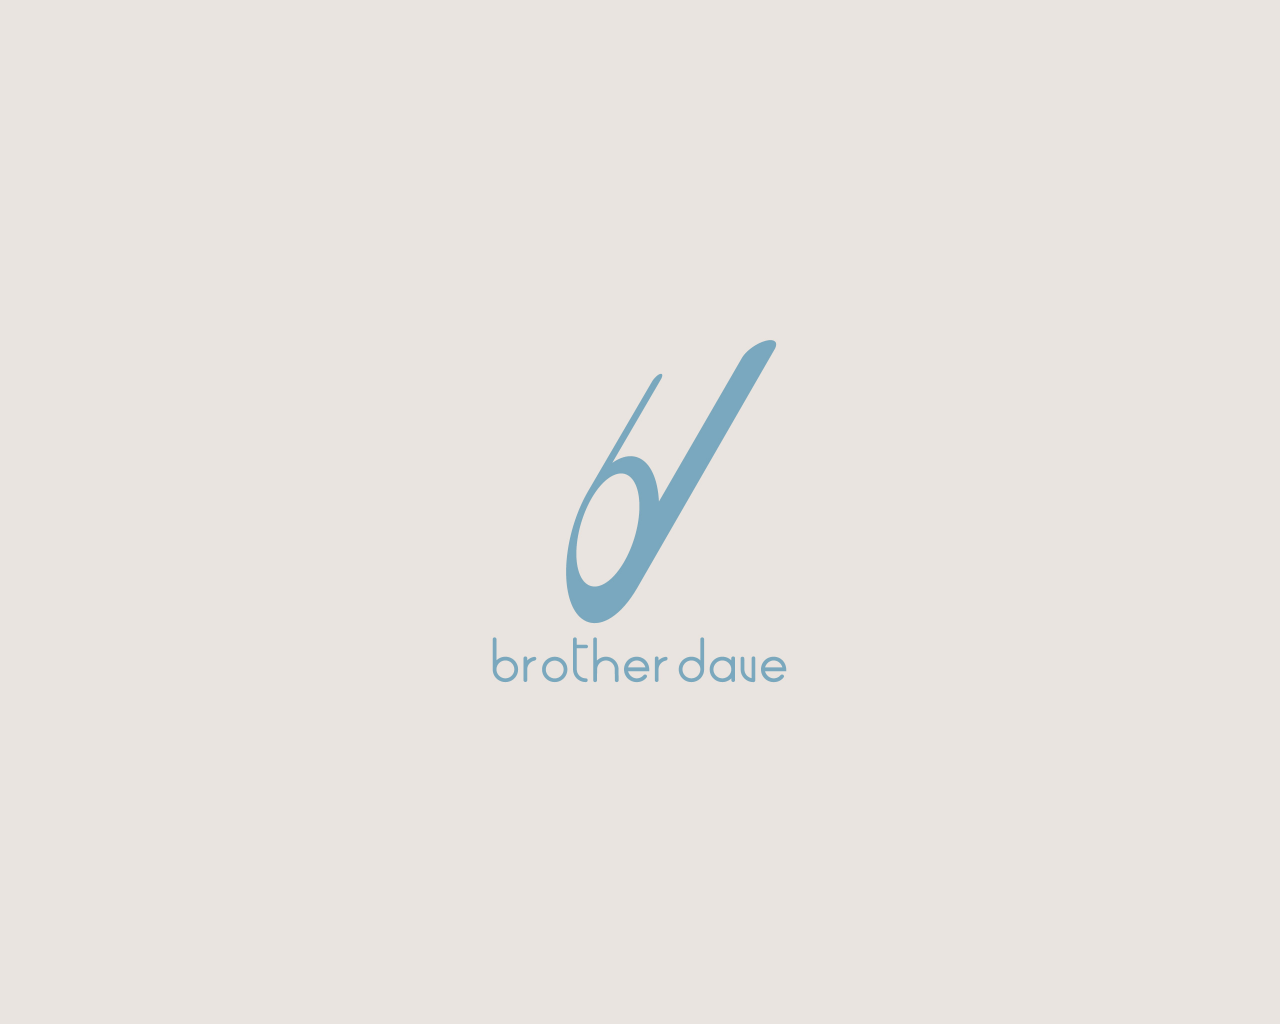 brotherdave.com